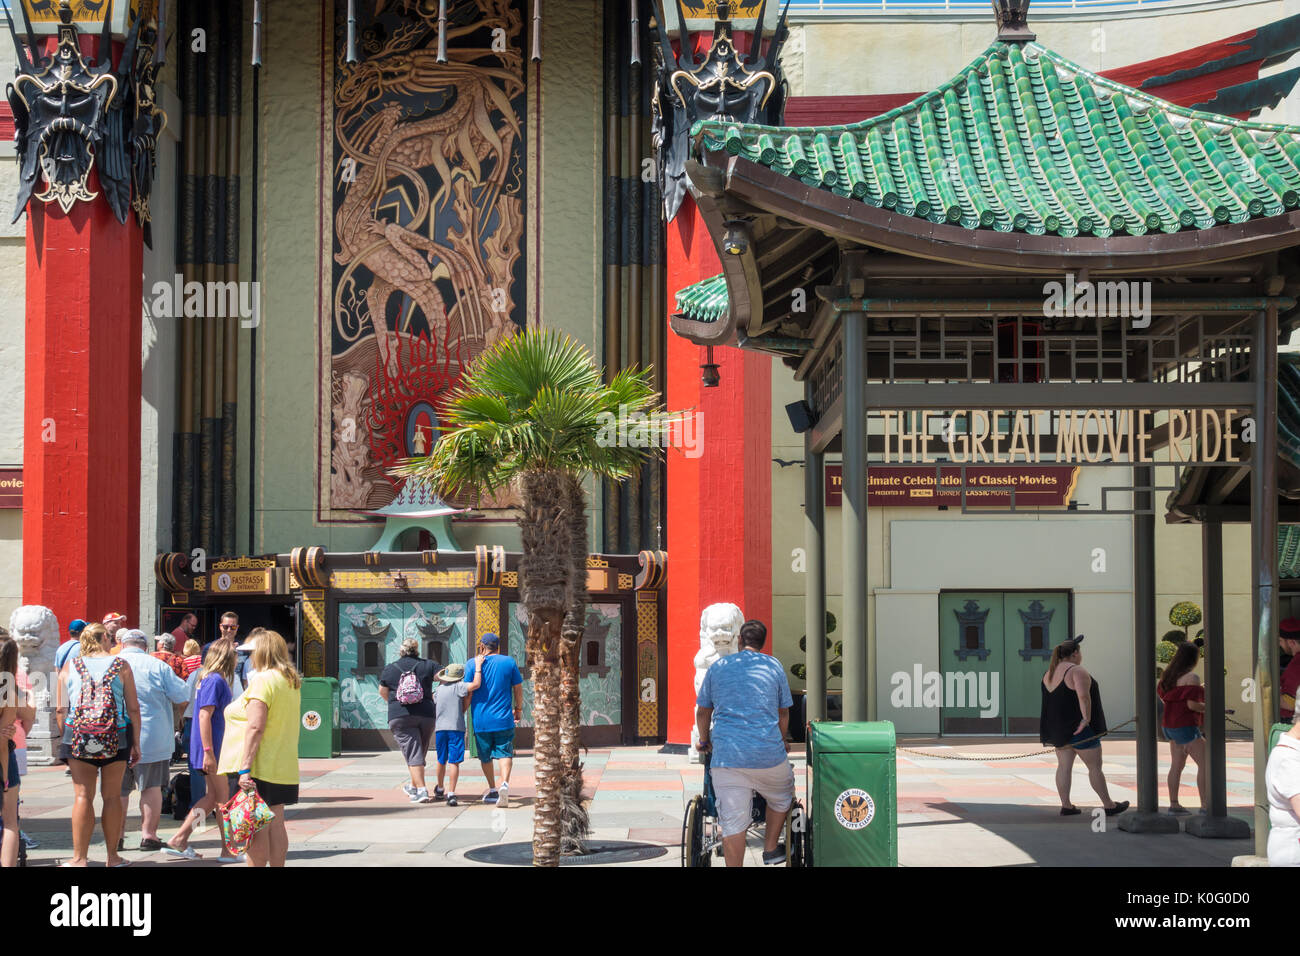 The Chinese Theatre in Disneys Hollwood Studios Theme Park, Orlando, Florida. Stock Photo